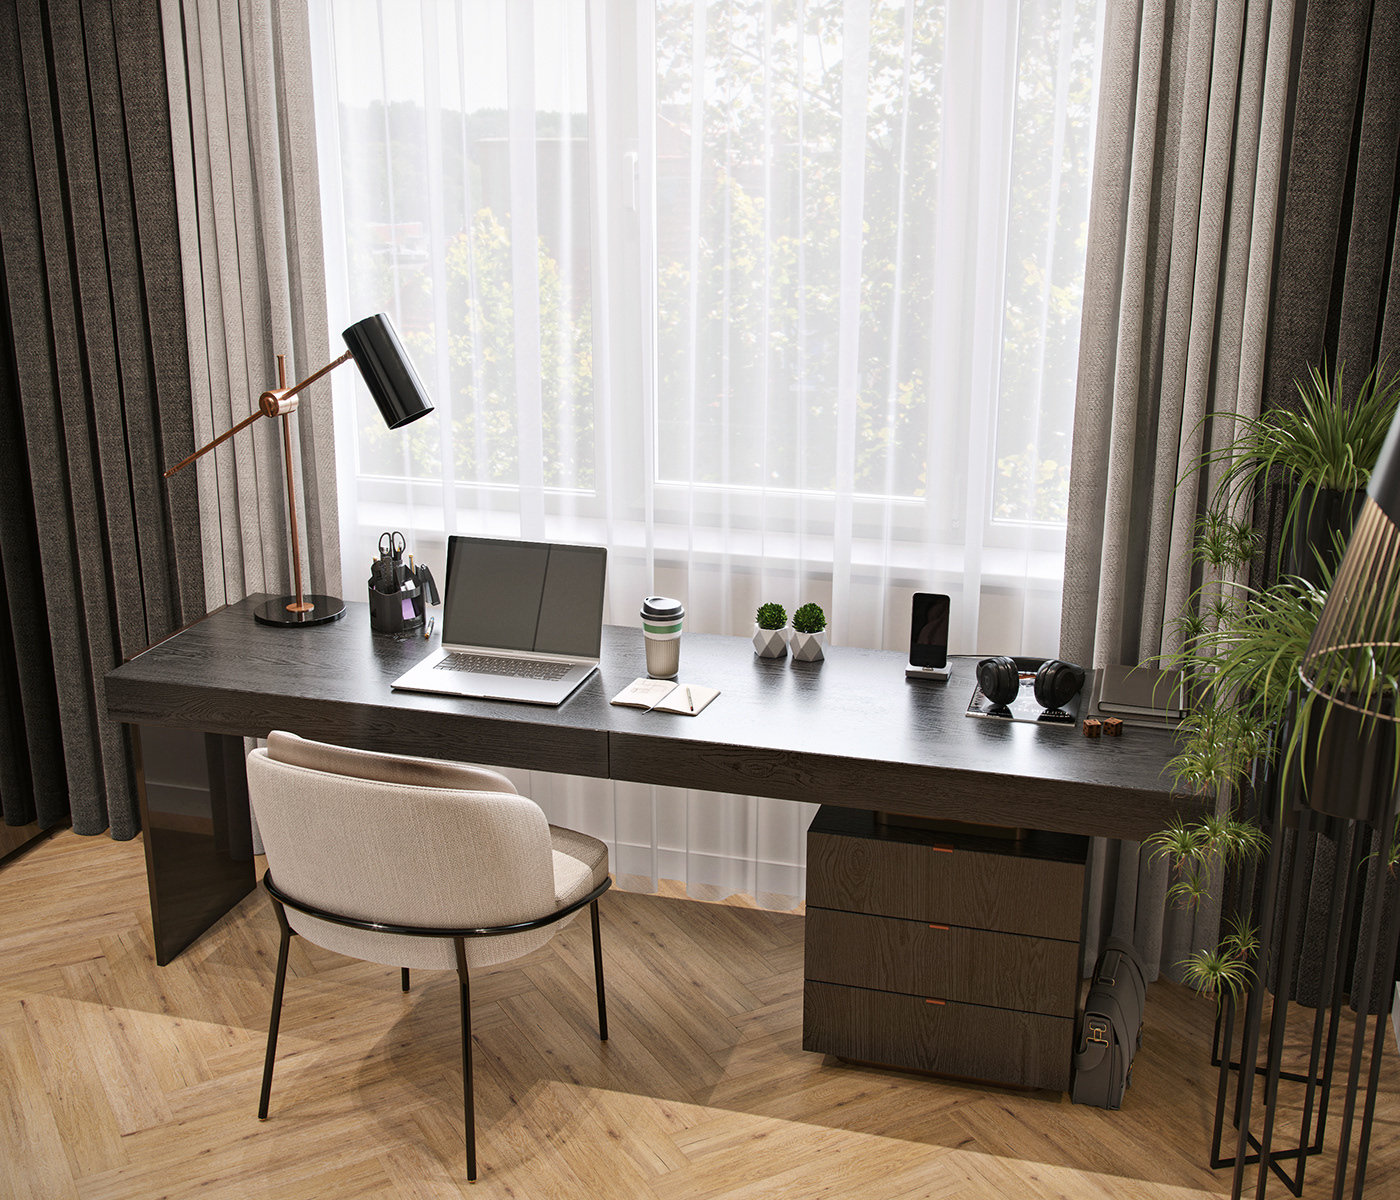 apartment bedroom CGI coronarenderer Interior interiordesign livingroom Render visualization